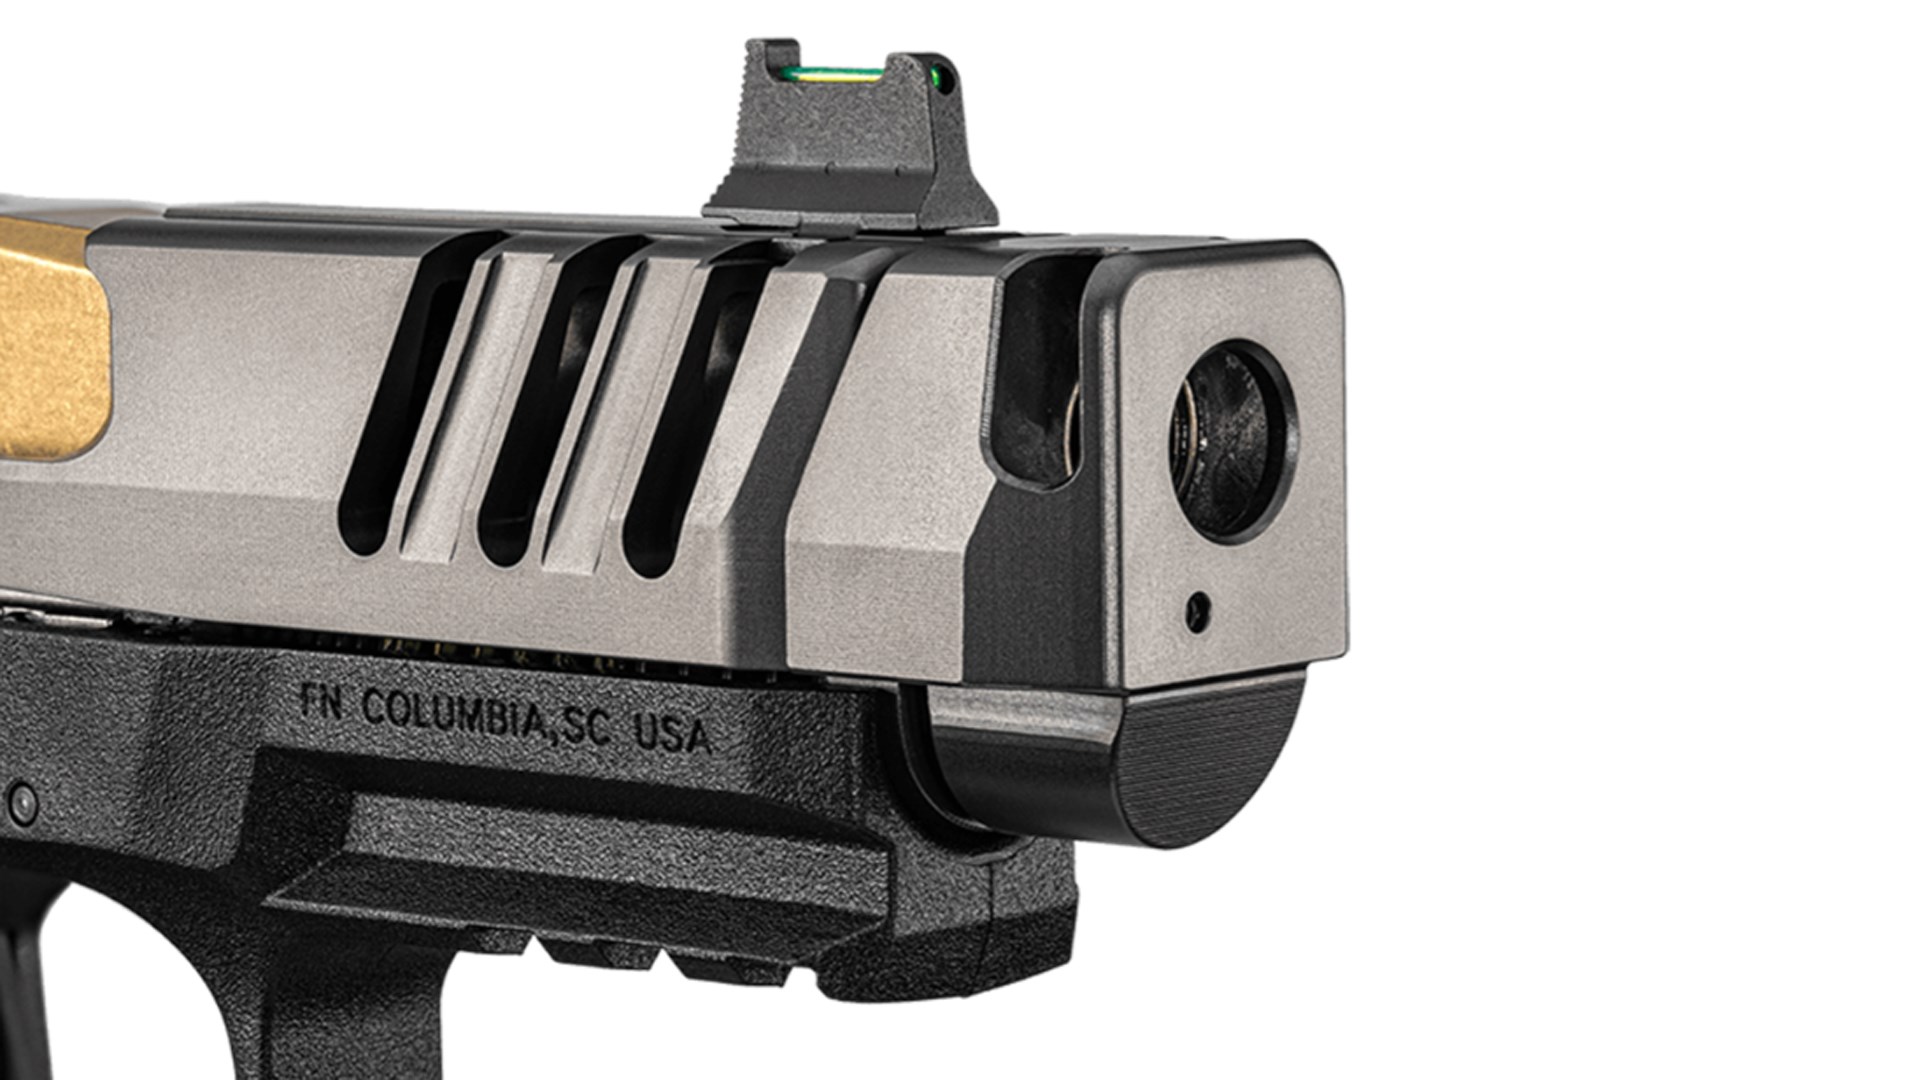 Muzzle compensator on the FN 509 CC Edge XL handgun.